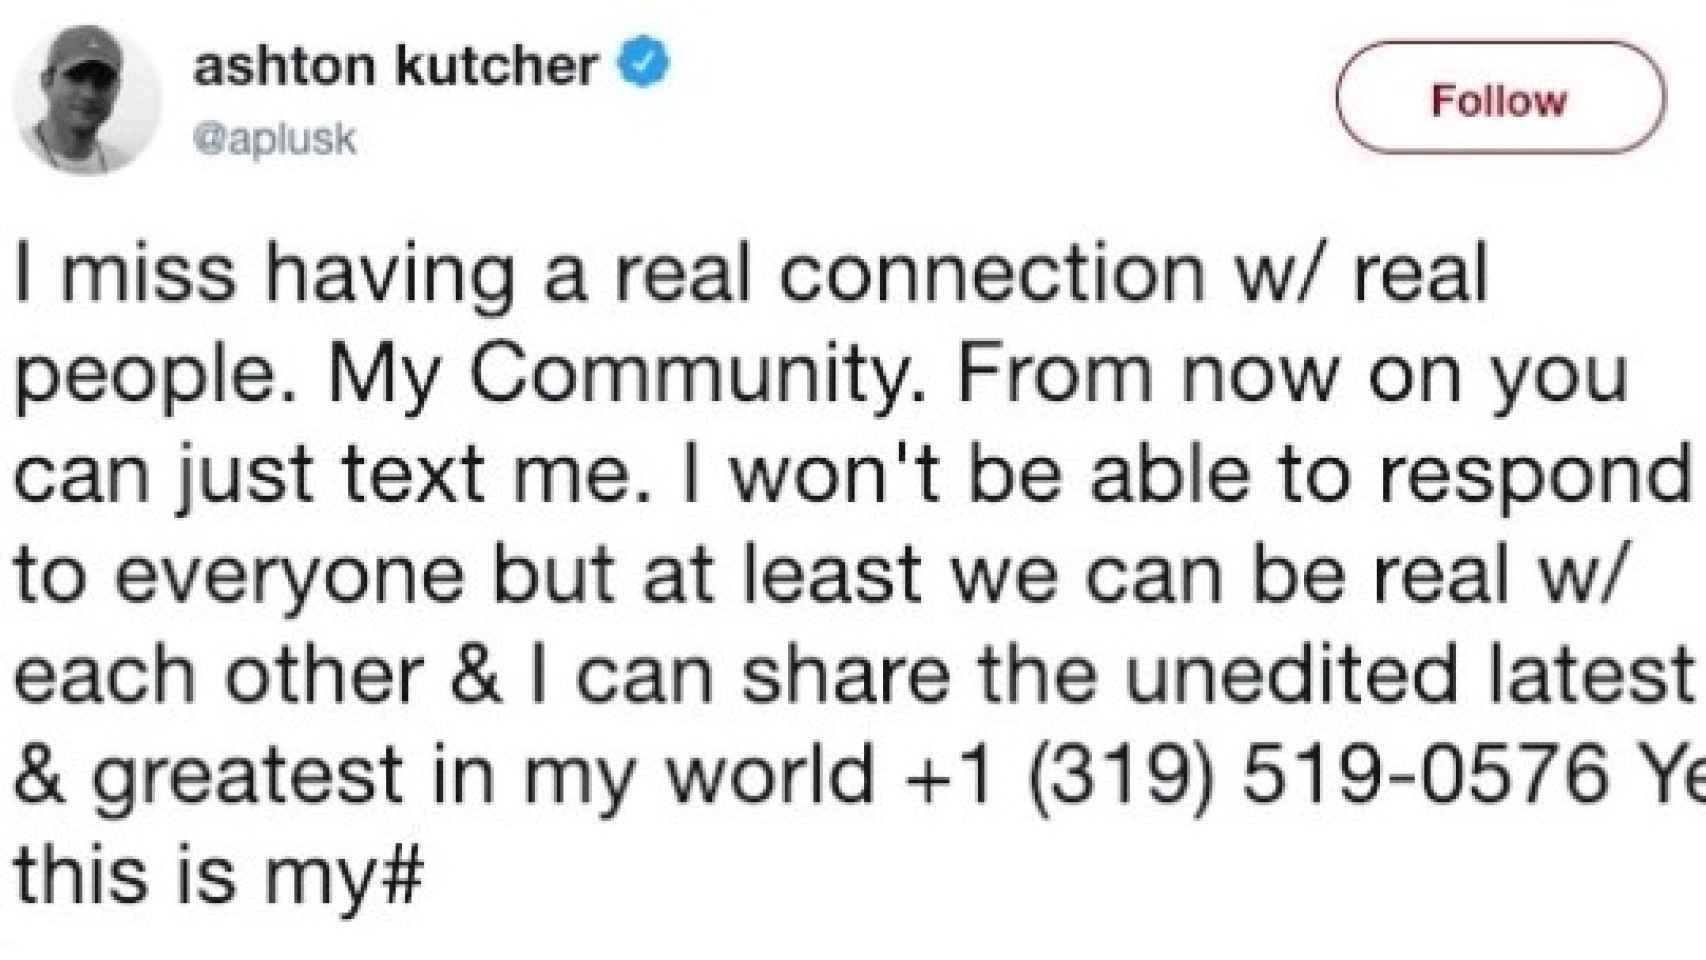 Publicación de Ashton Kutcher en Twitter